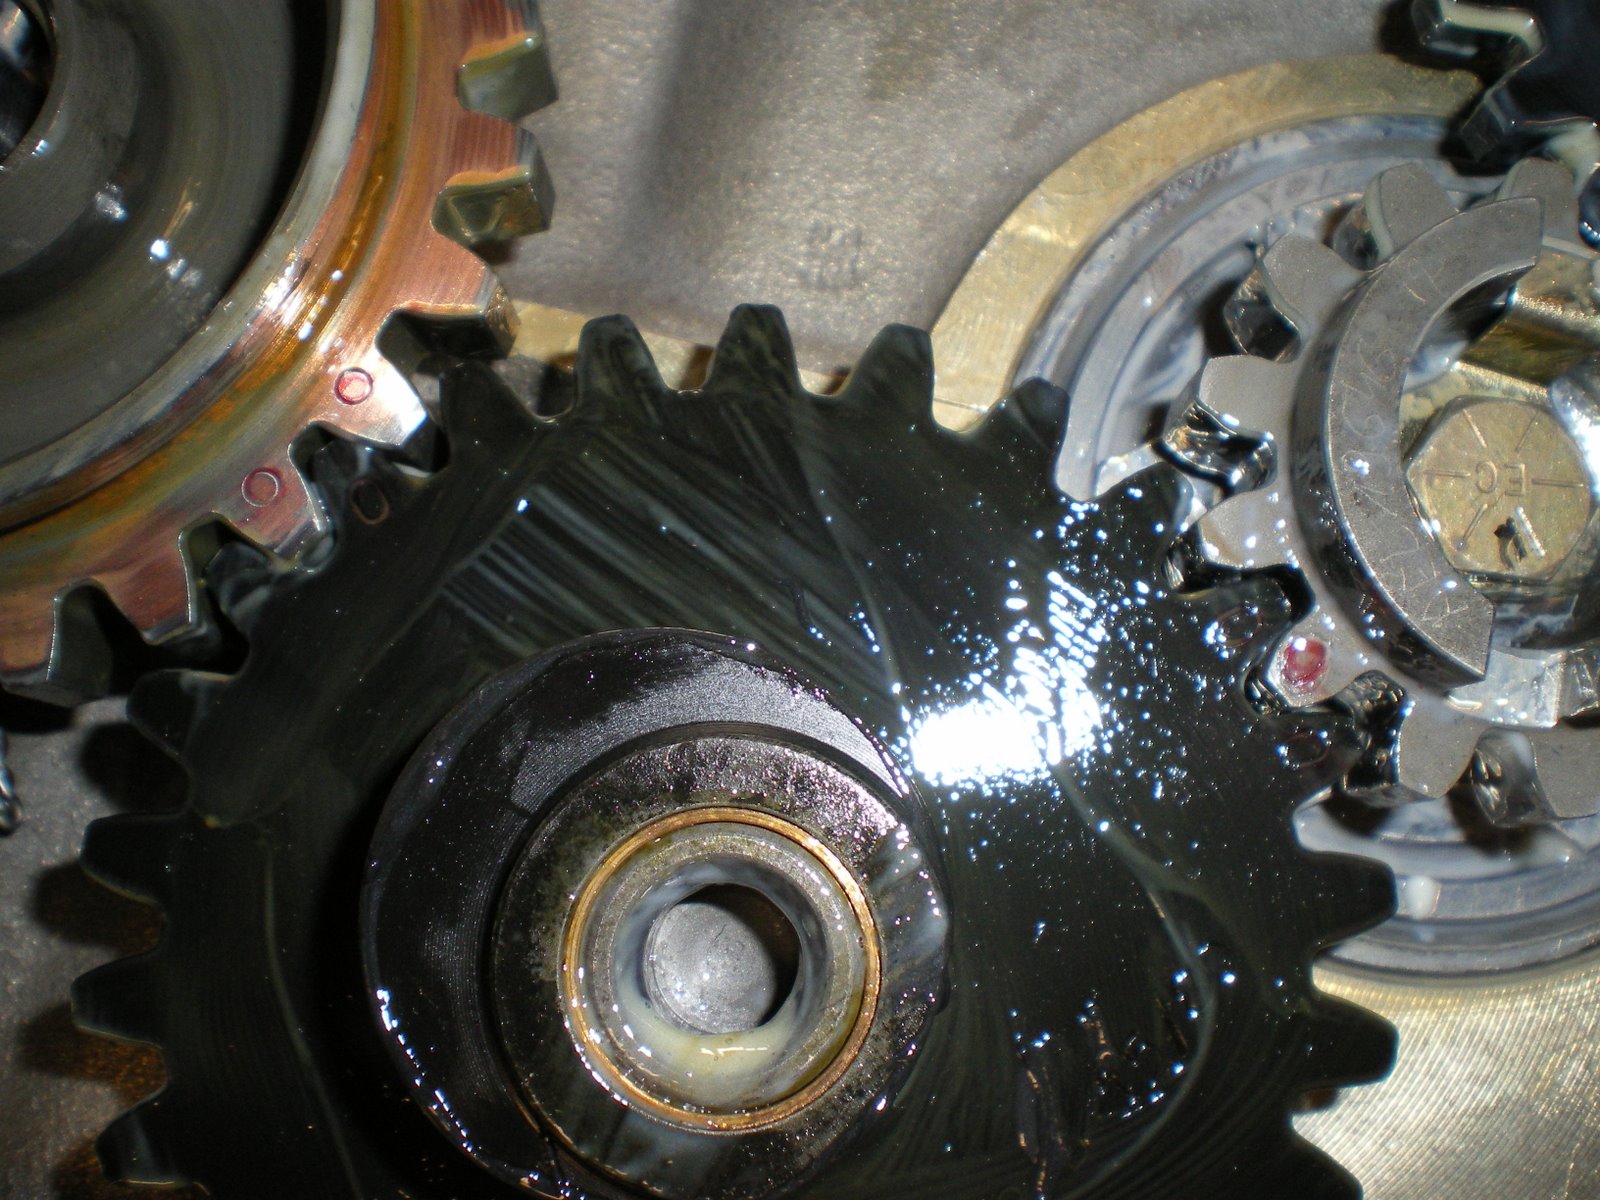 Bottom engine assembly